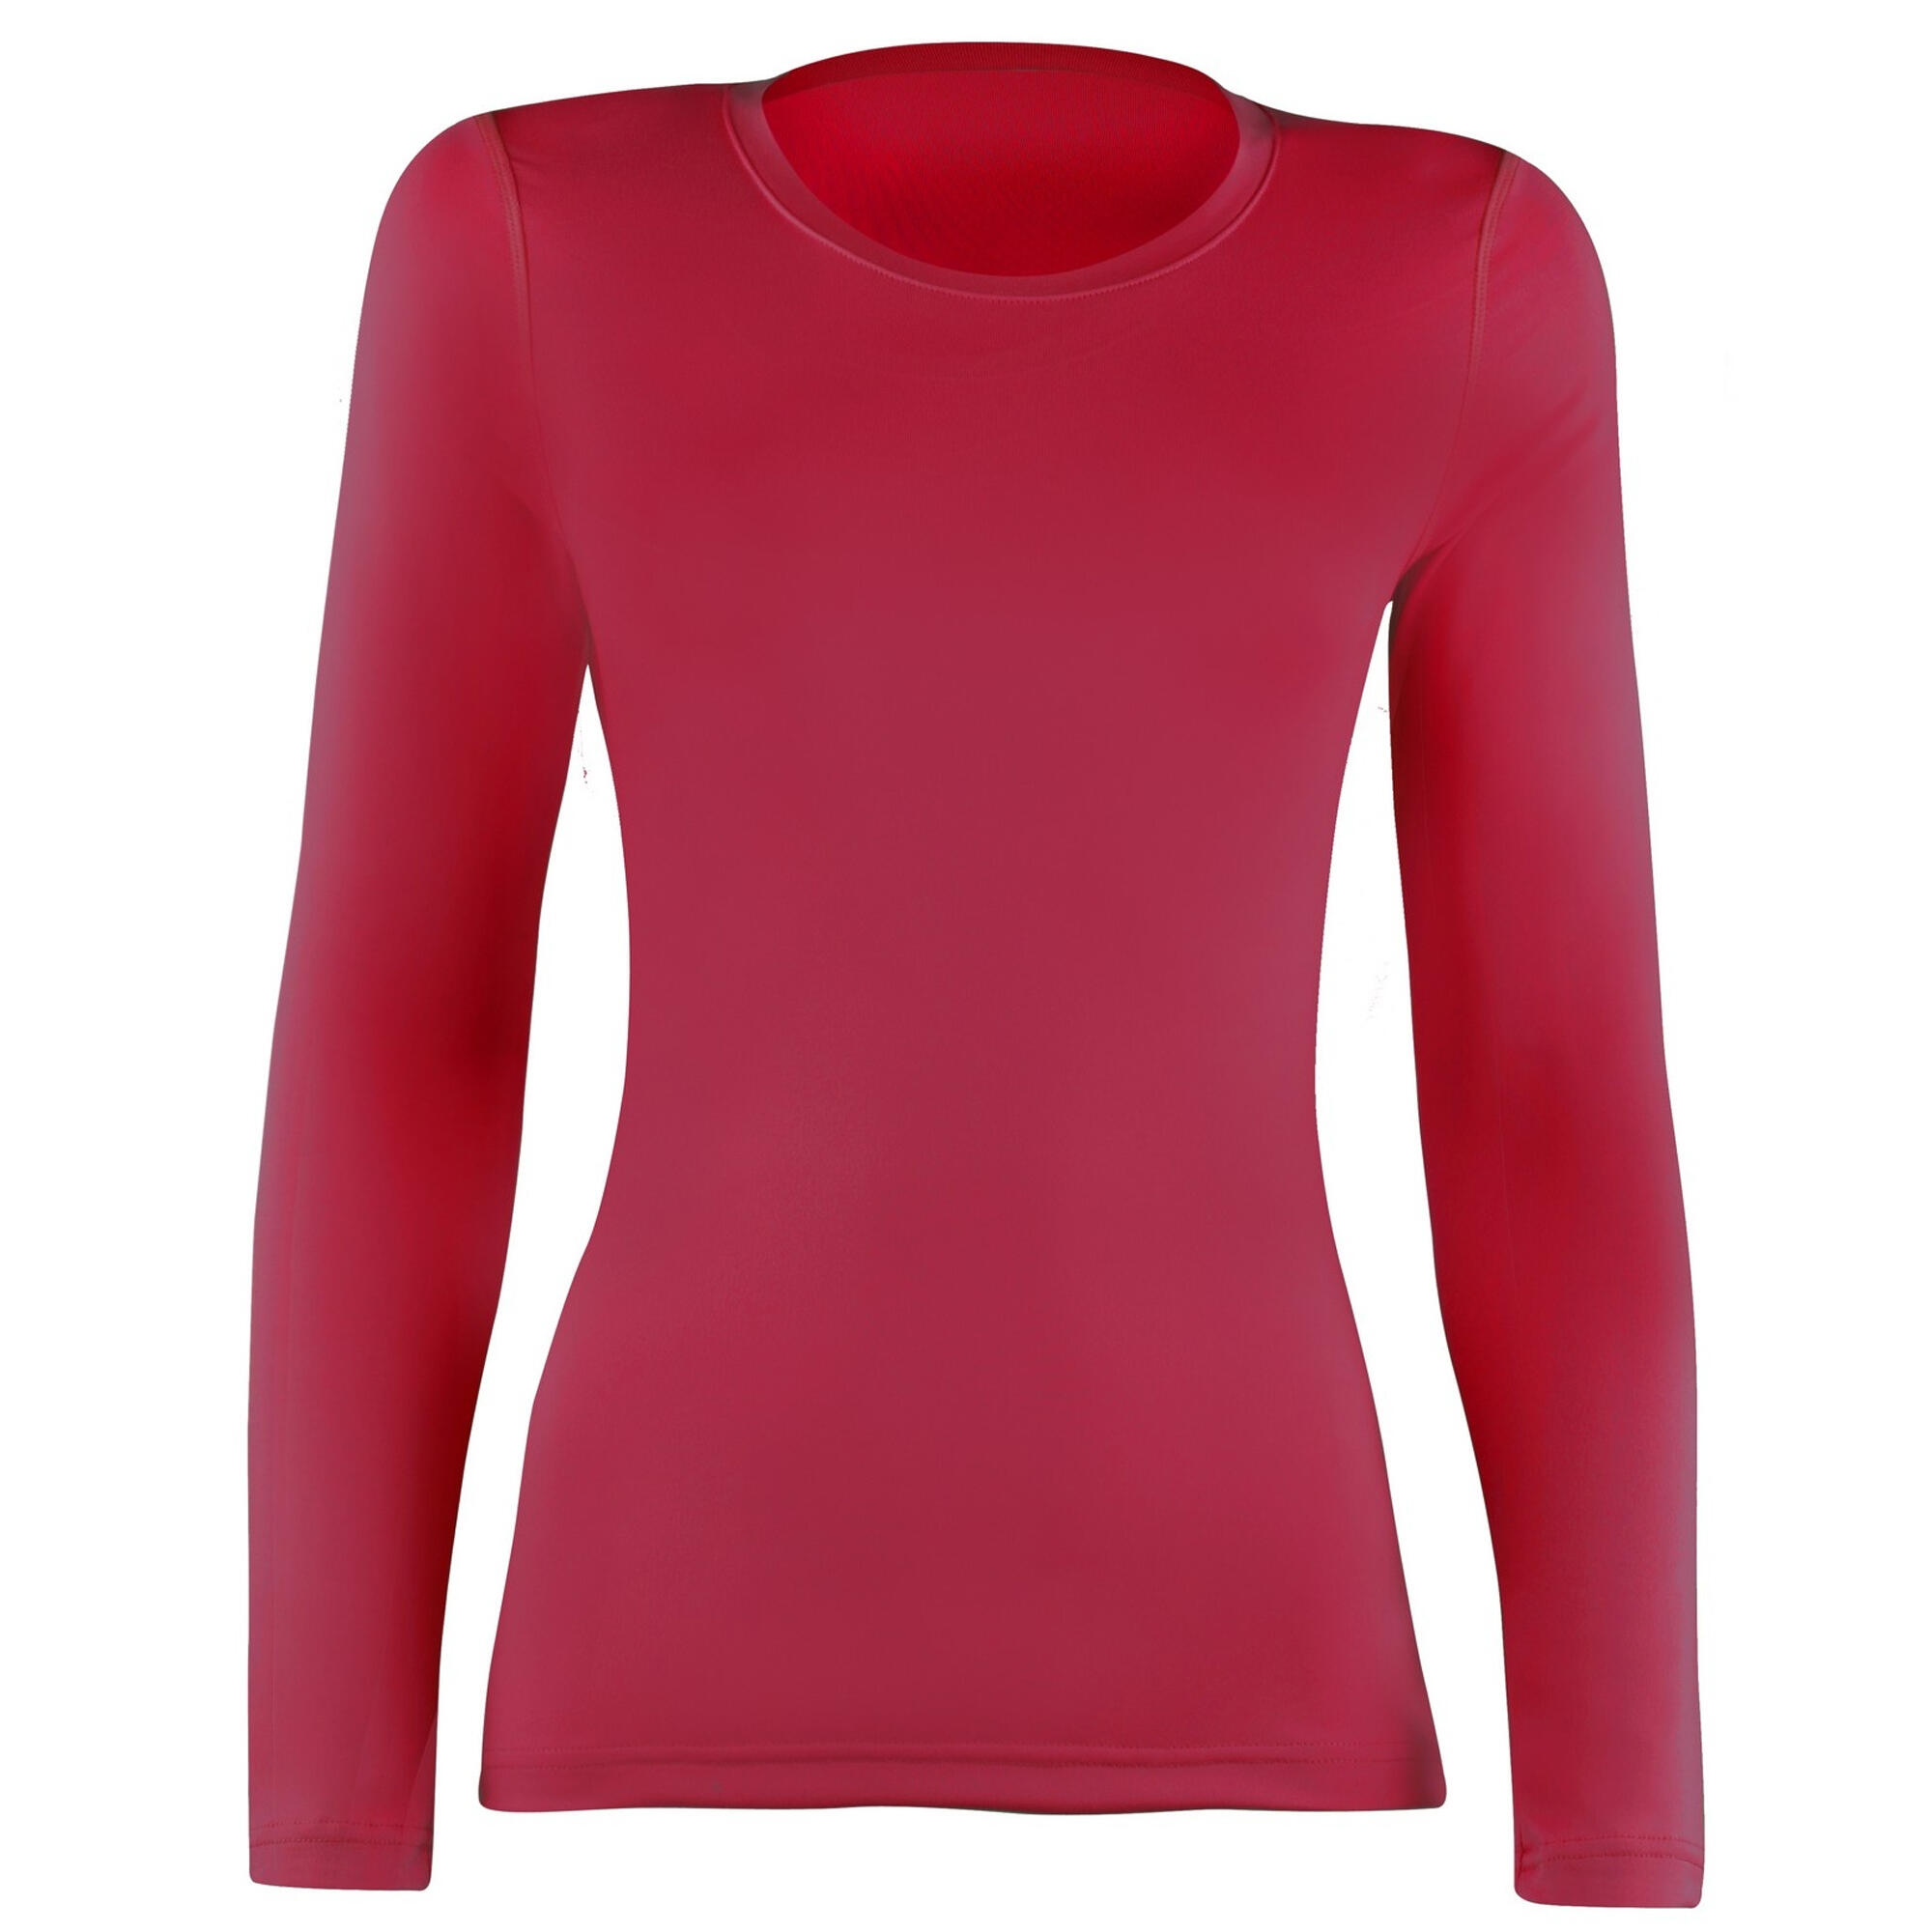 RHINO Womens/Ladies Sports Baselayer Long Sleeve (Red)